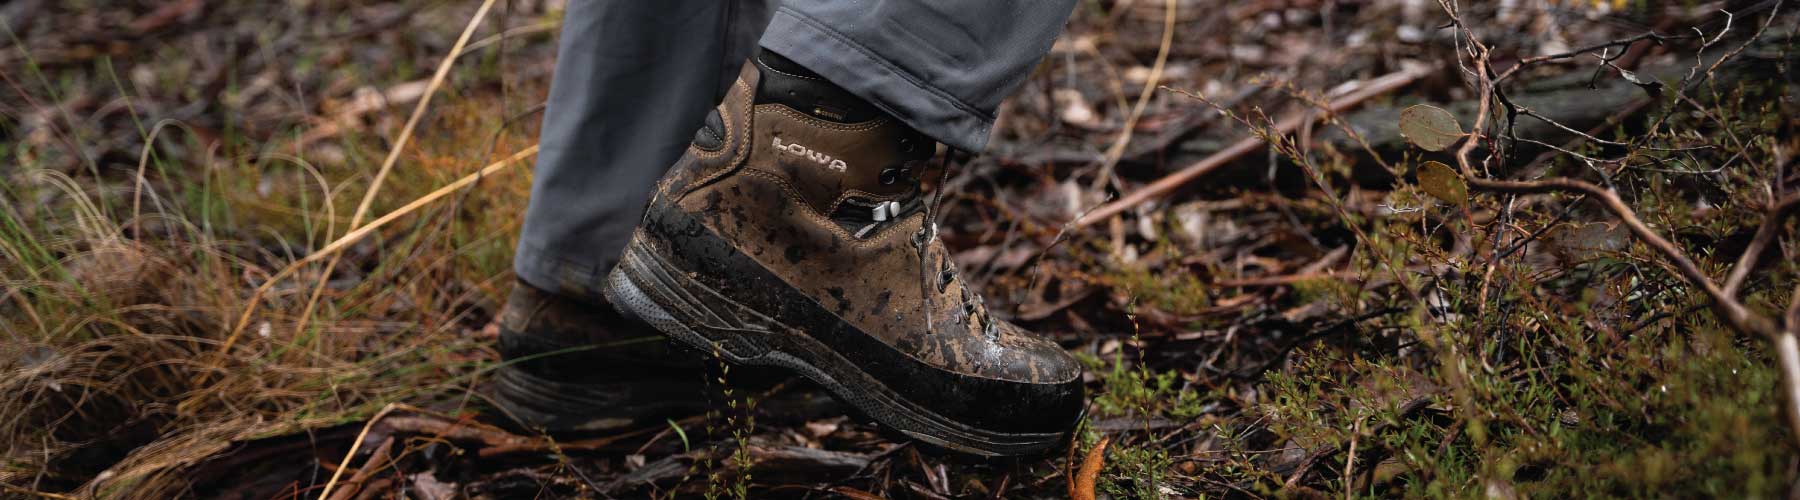 Lowa Renegade Gtx Mid Dark grey nubuck Mens Outdoor Walking Boots  310945-0954